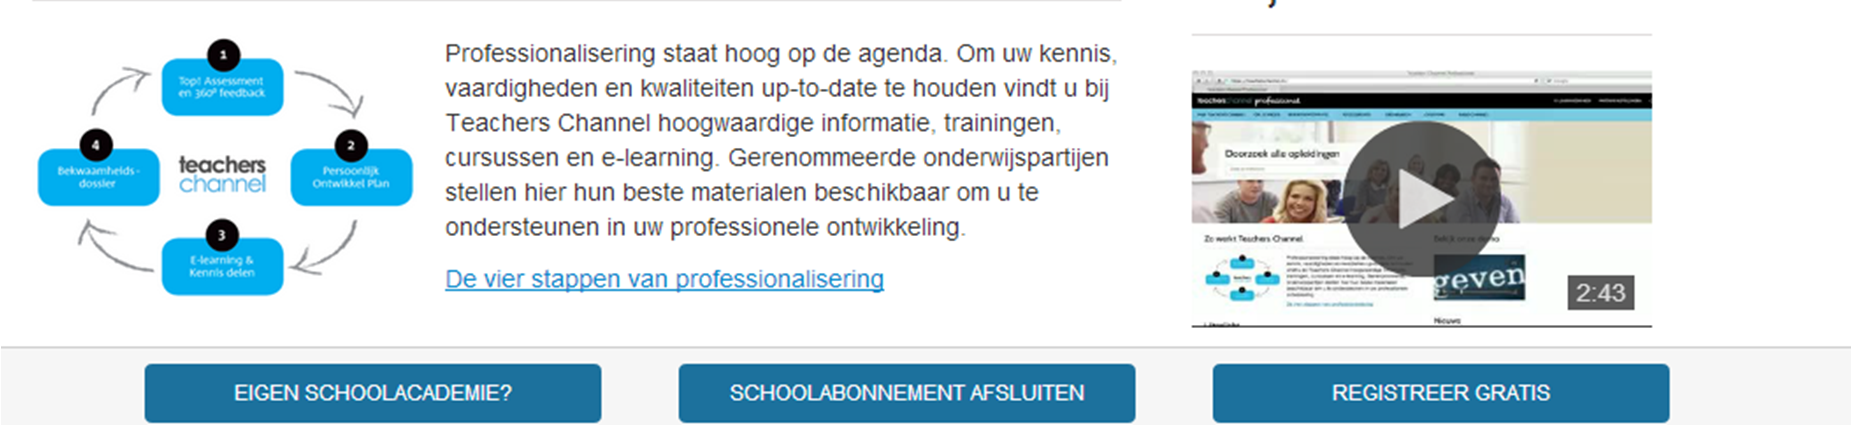 Inloggen op Teachers Channel Om te beginnen ga je naar www.teacherschannel.nl. Rechtsbovenin de pagina kun je inloggen.